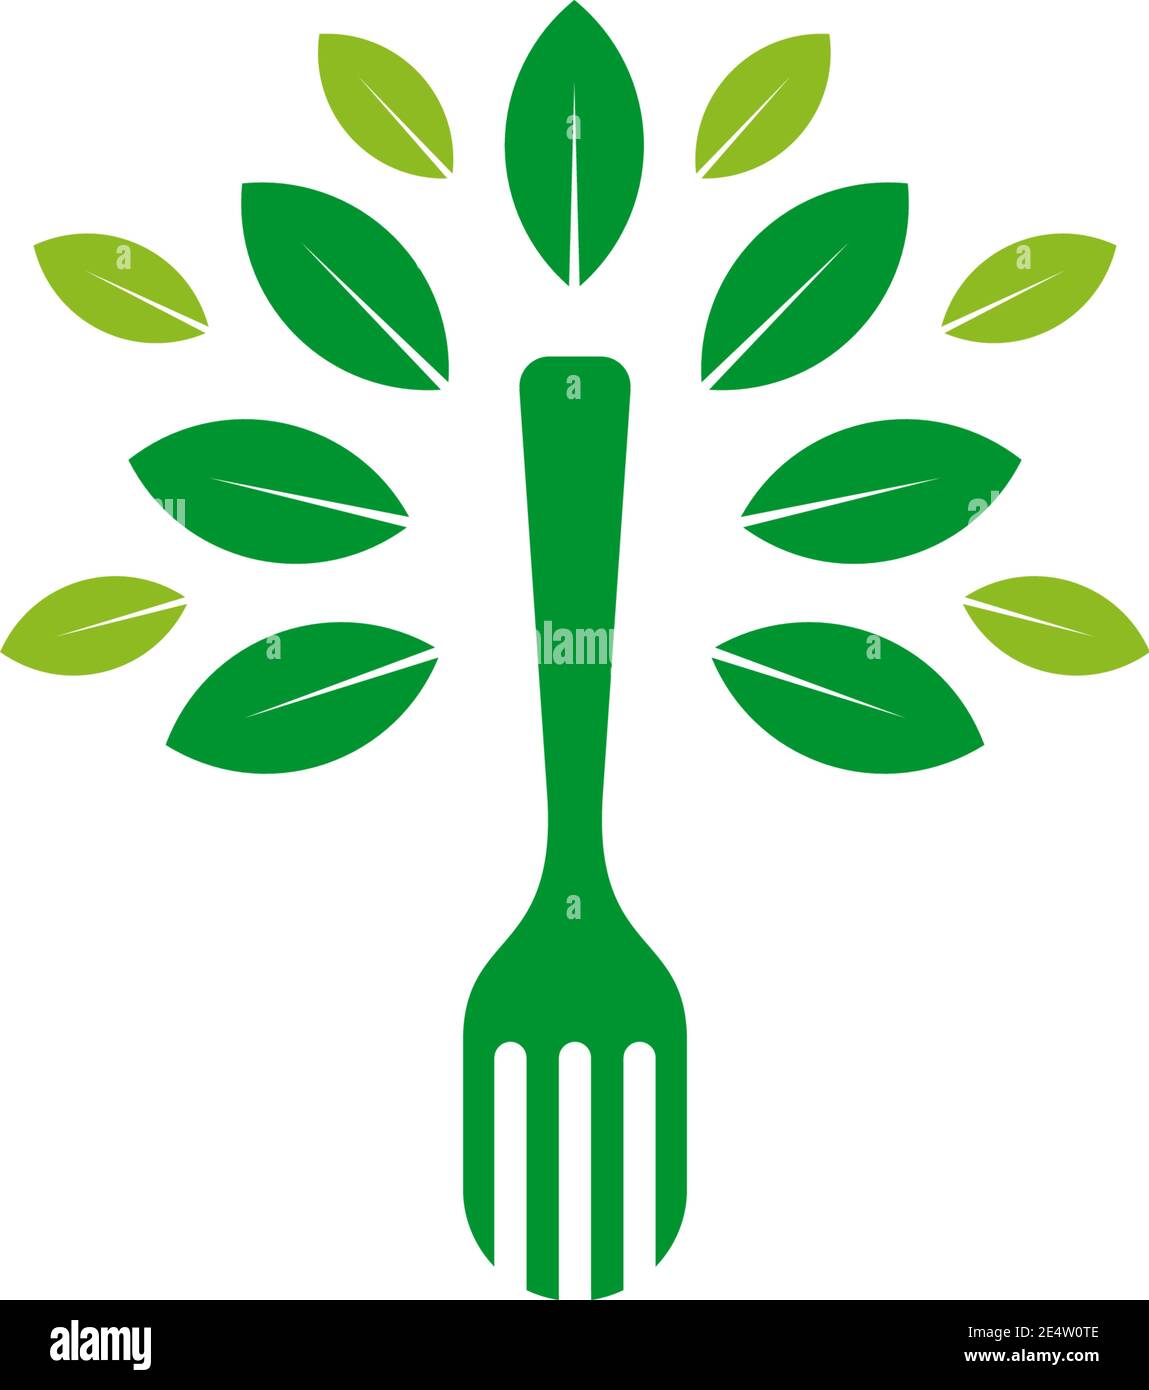 Restaurant Logo Design Inspiration